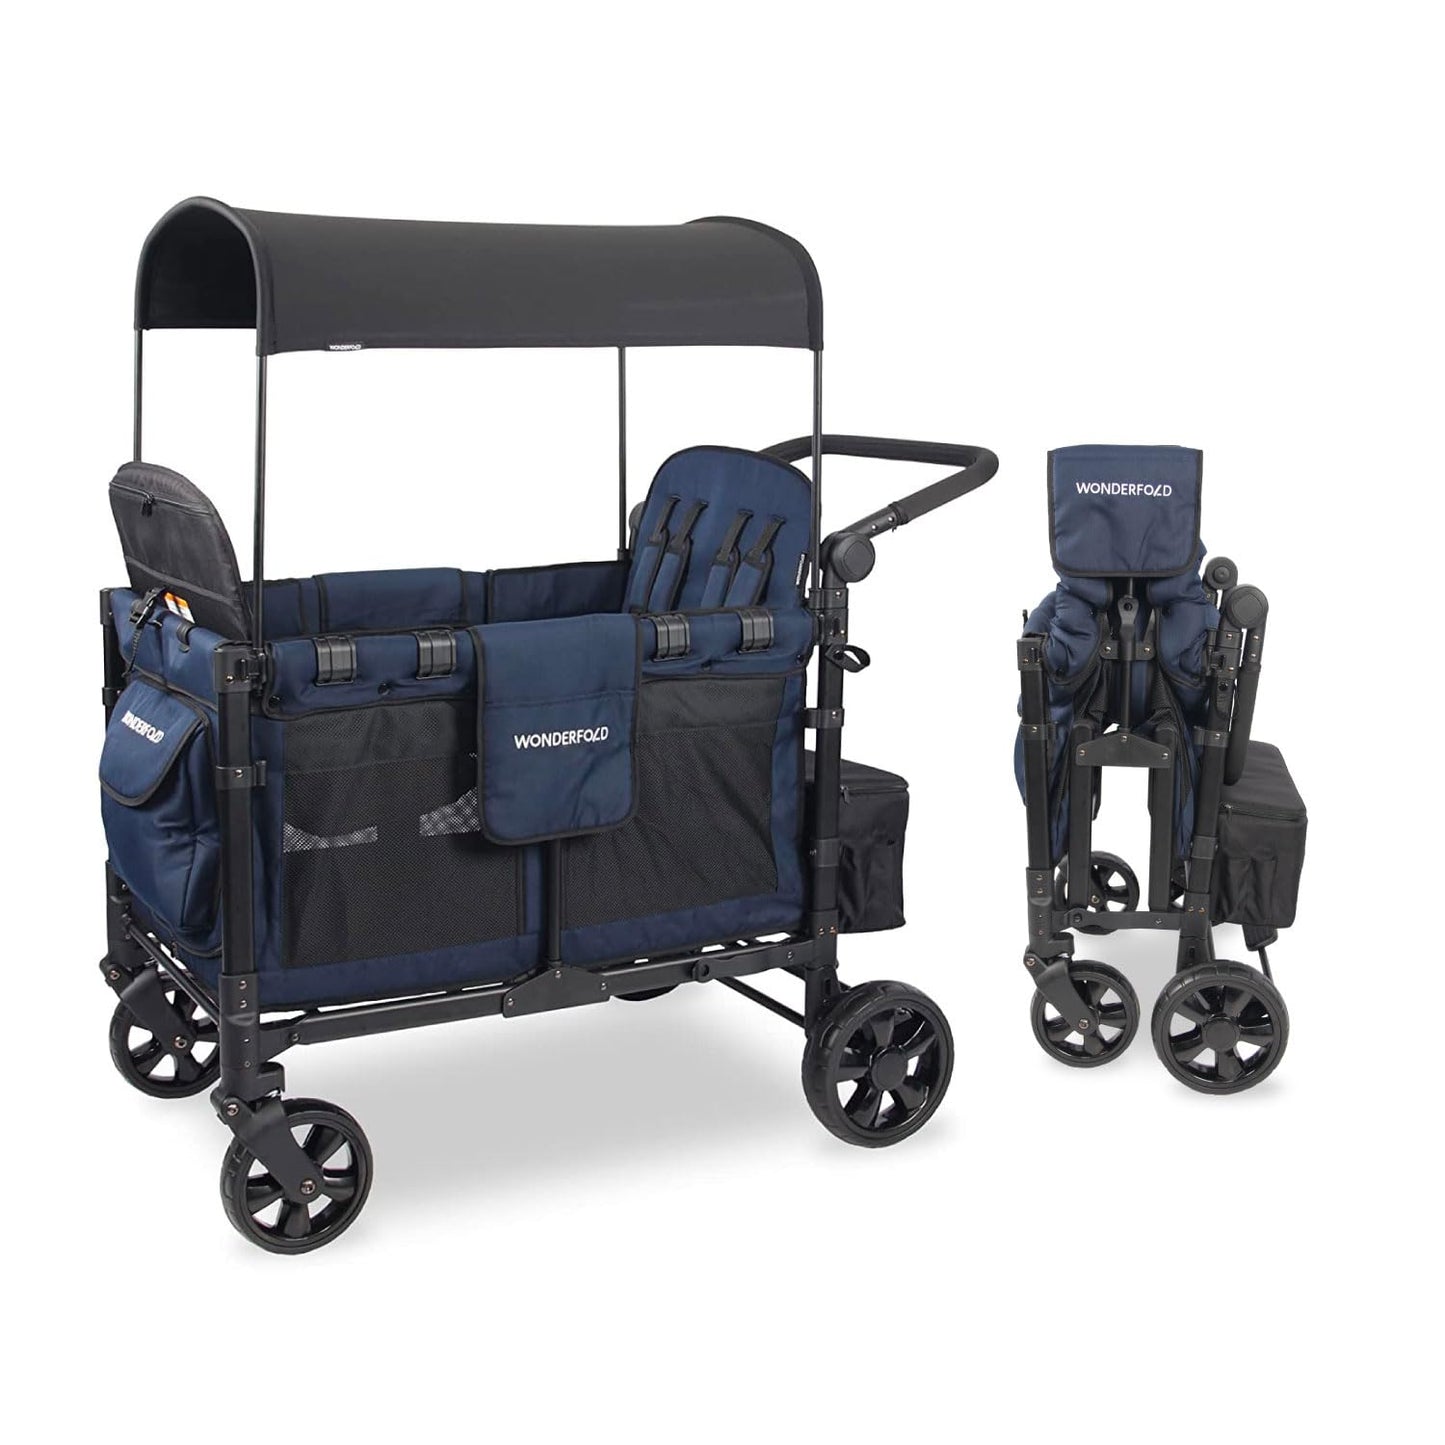 WONDERFOLD W4 Elite Quad Stroller Wagon, 4 Seater, Noble Navy